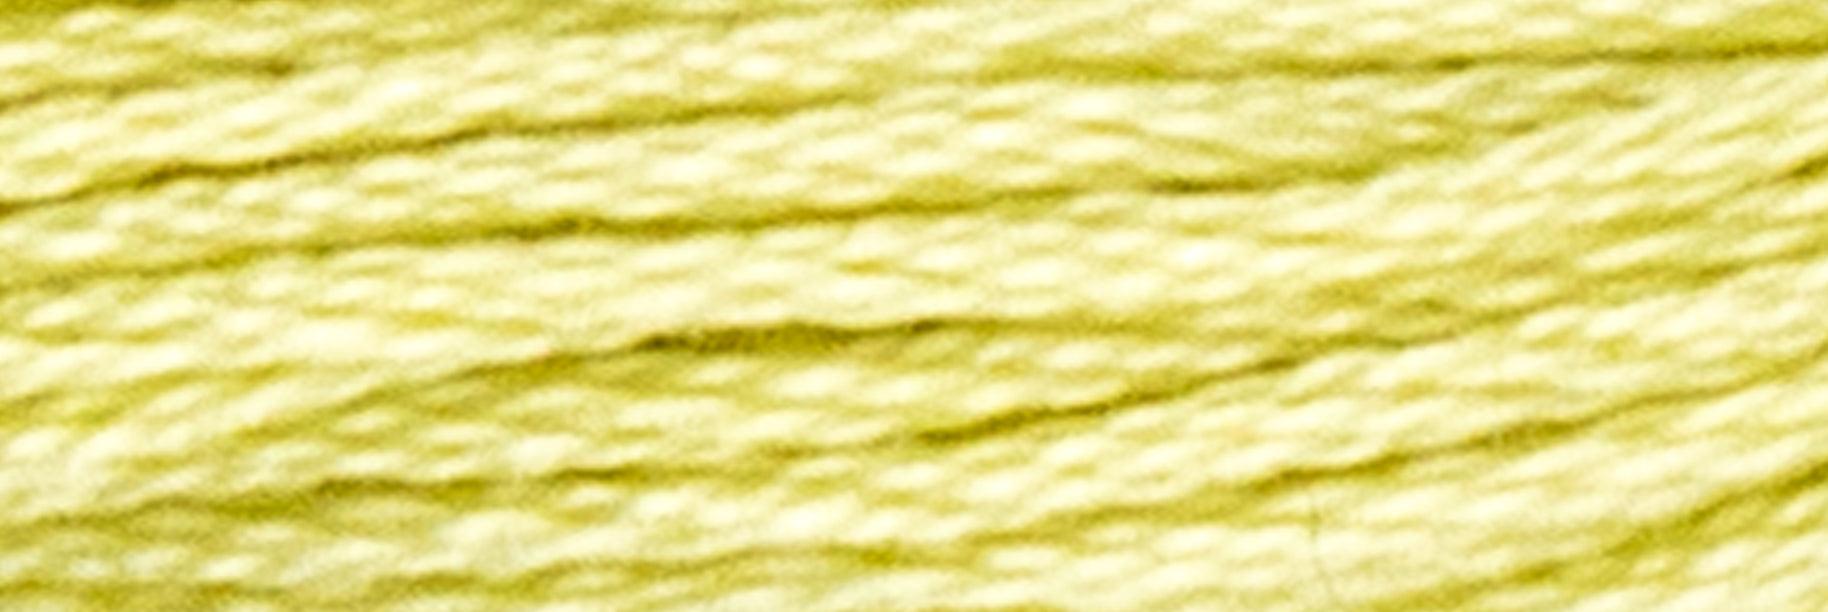 Stranded Cotton Luca-S - 306 / DMC 10 / Anchor X - Luca-S Stranded Cotton